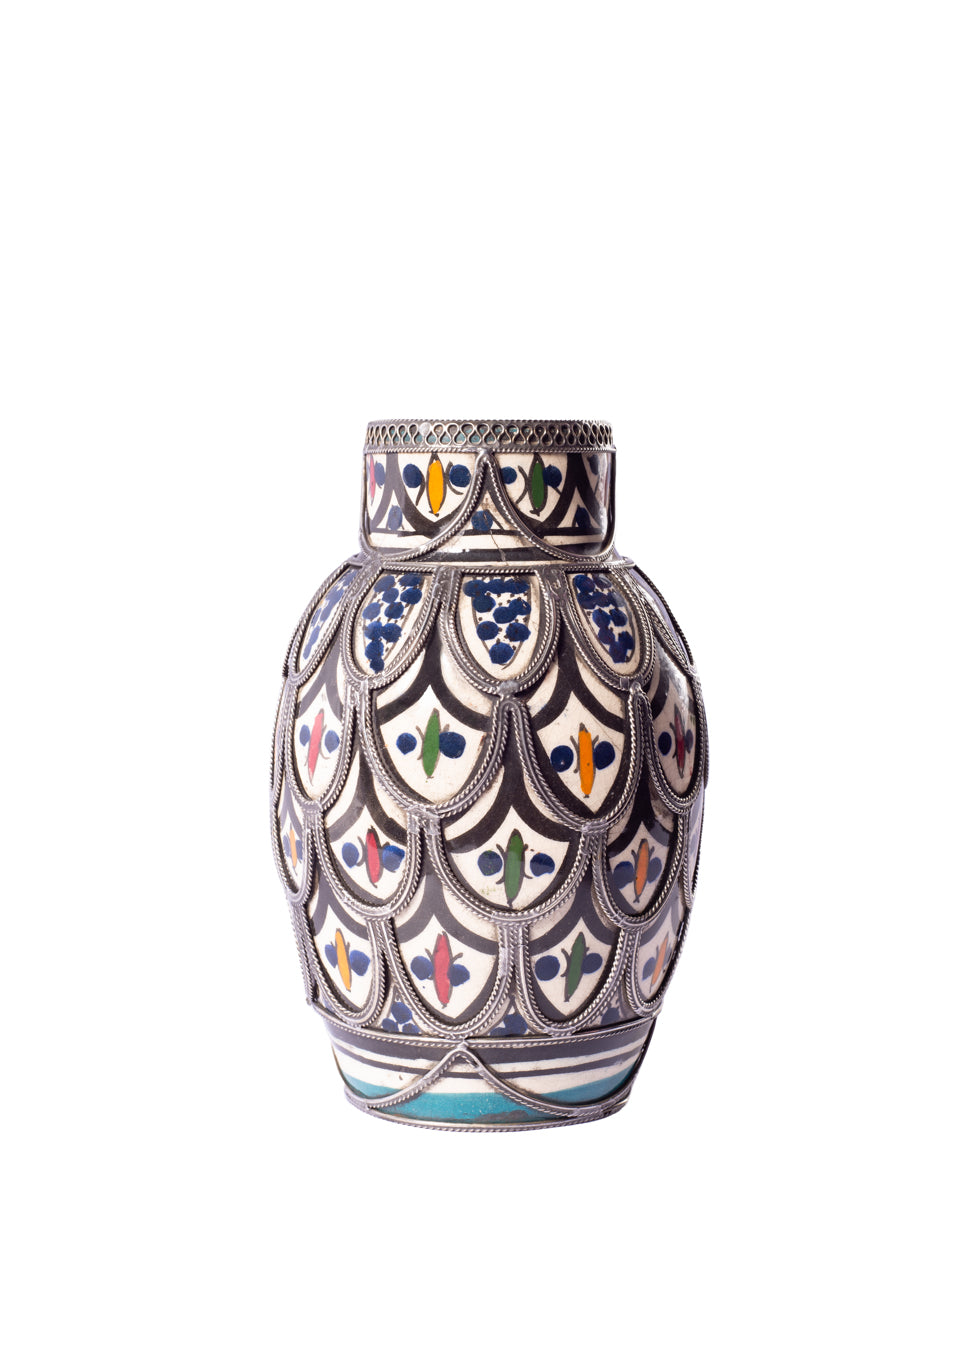 Vintage Moroccan Ceramic Vase with Silver Filigree